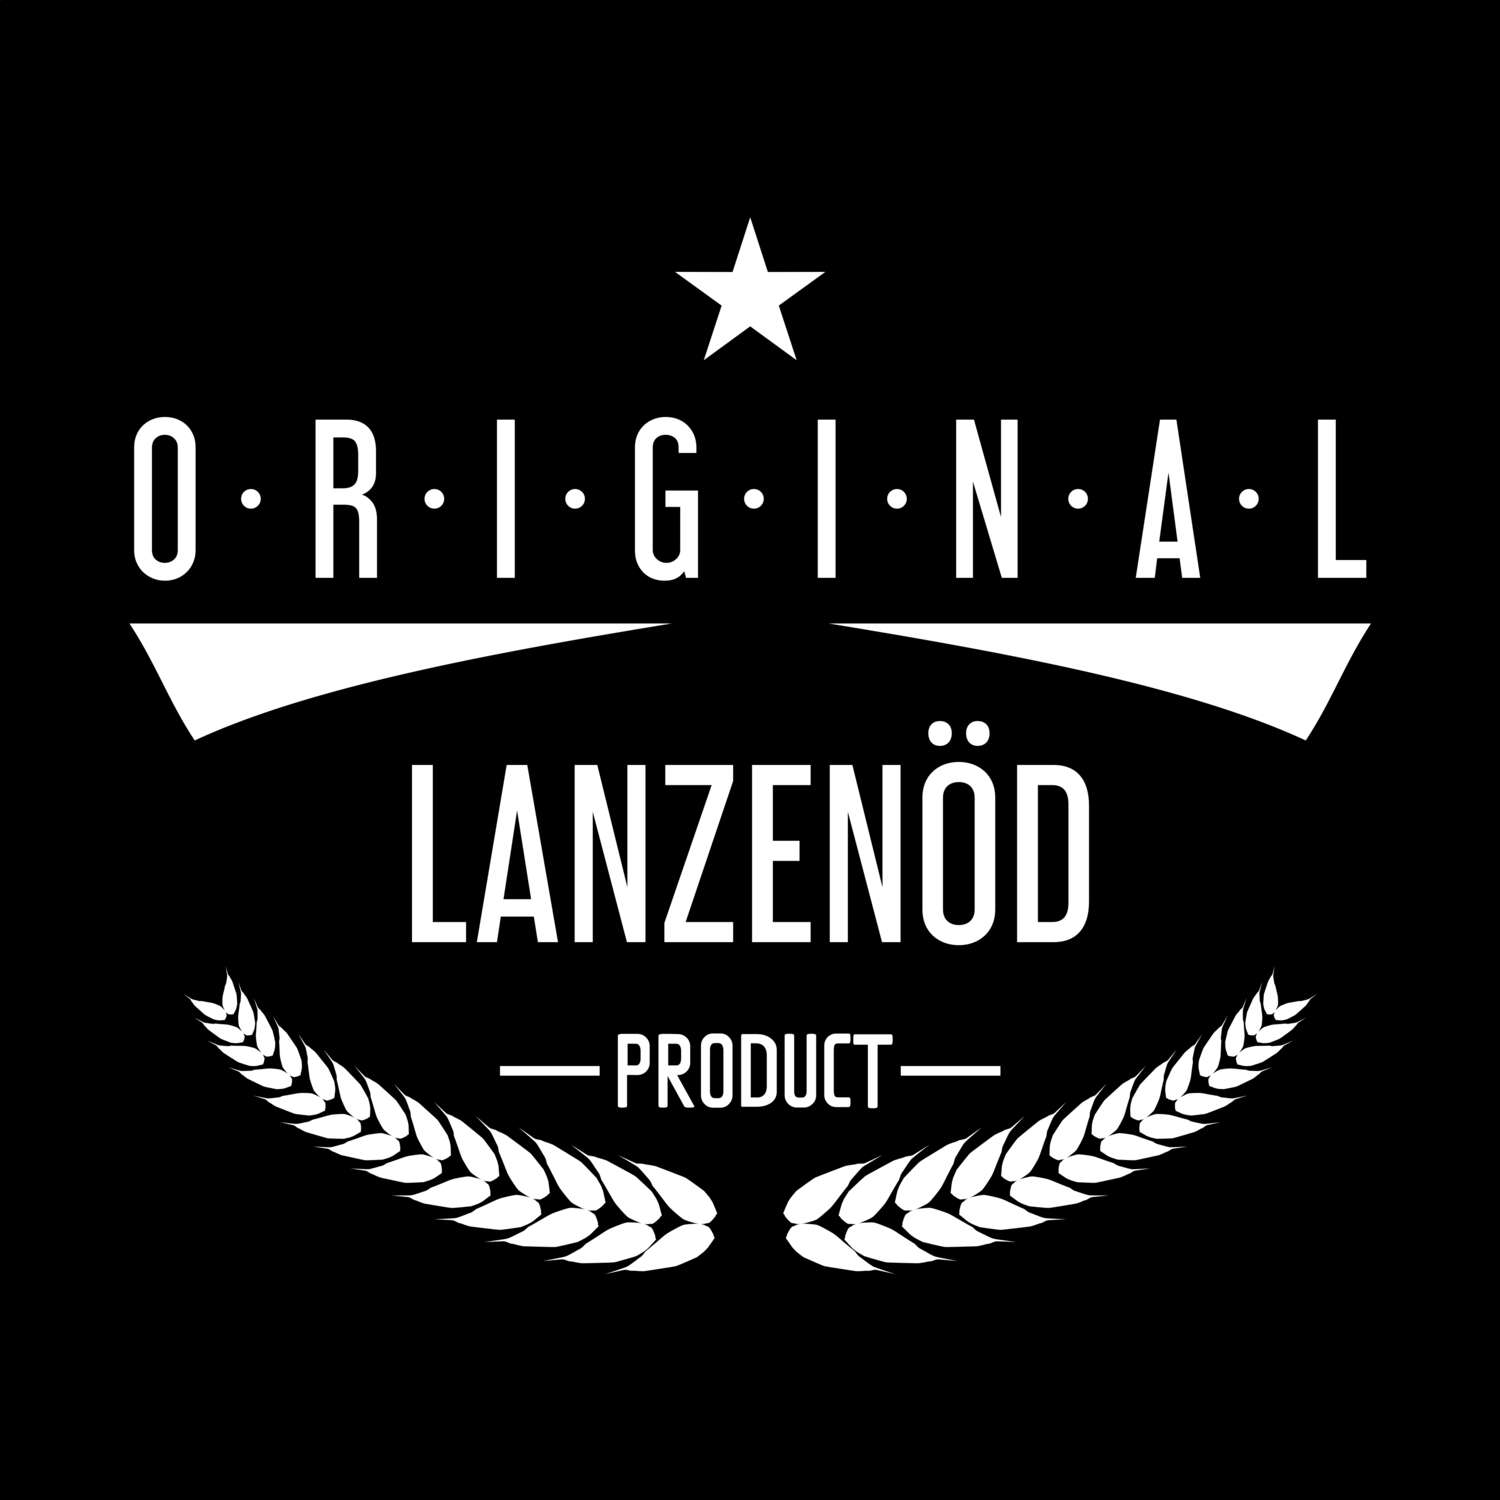 Lanzenöd T-Shirt »Original Product«